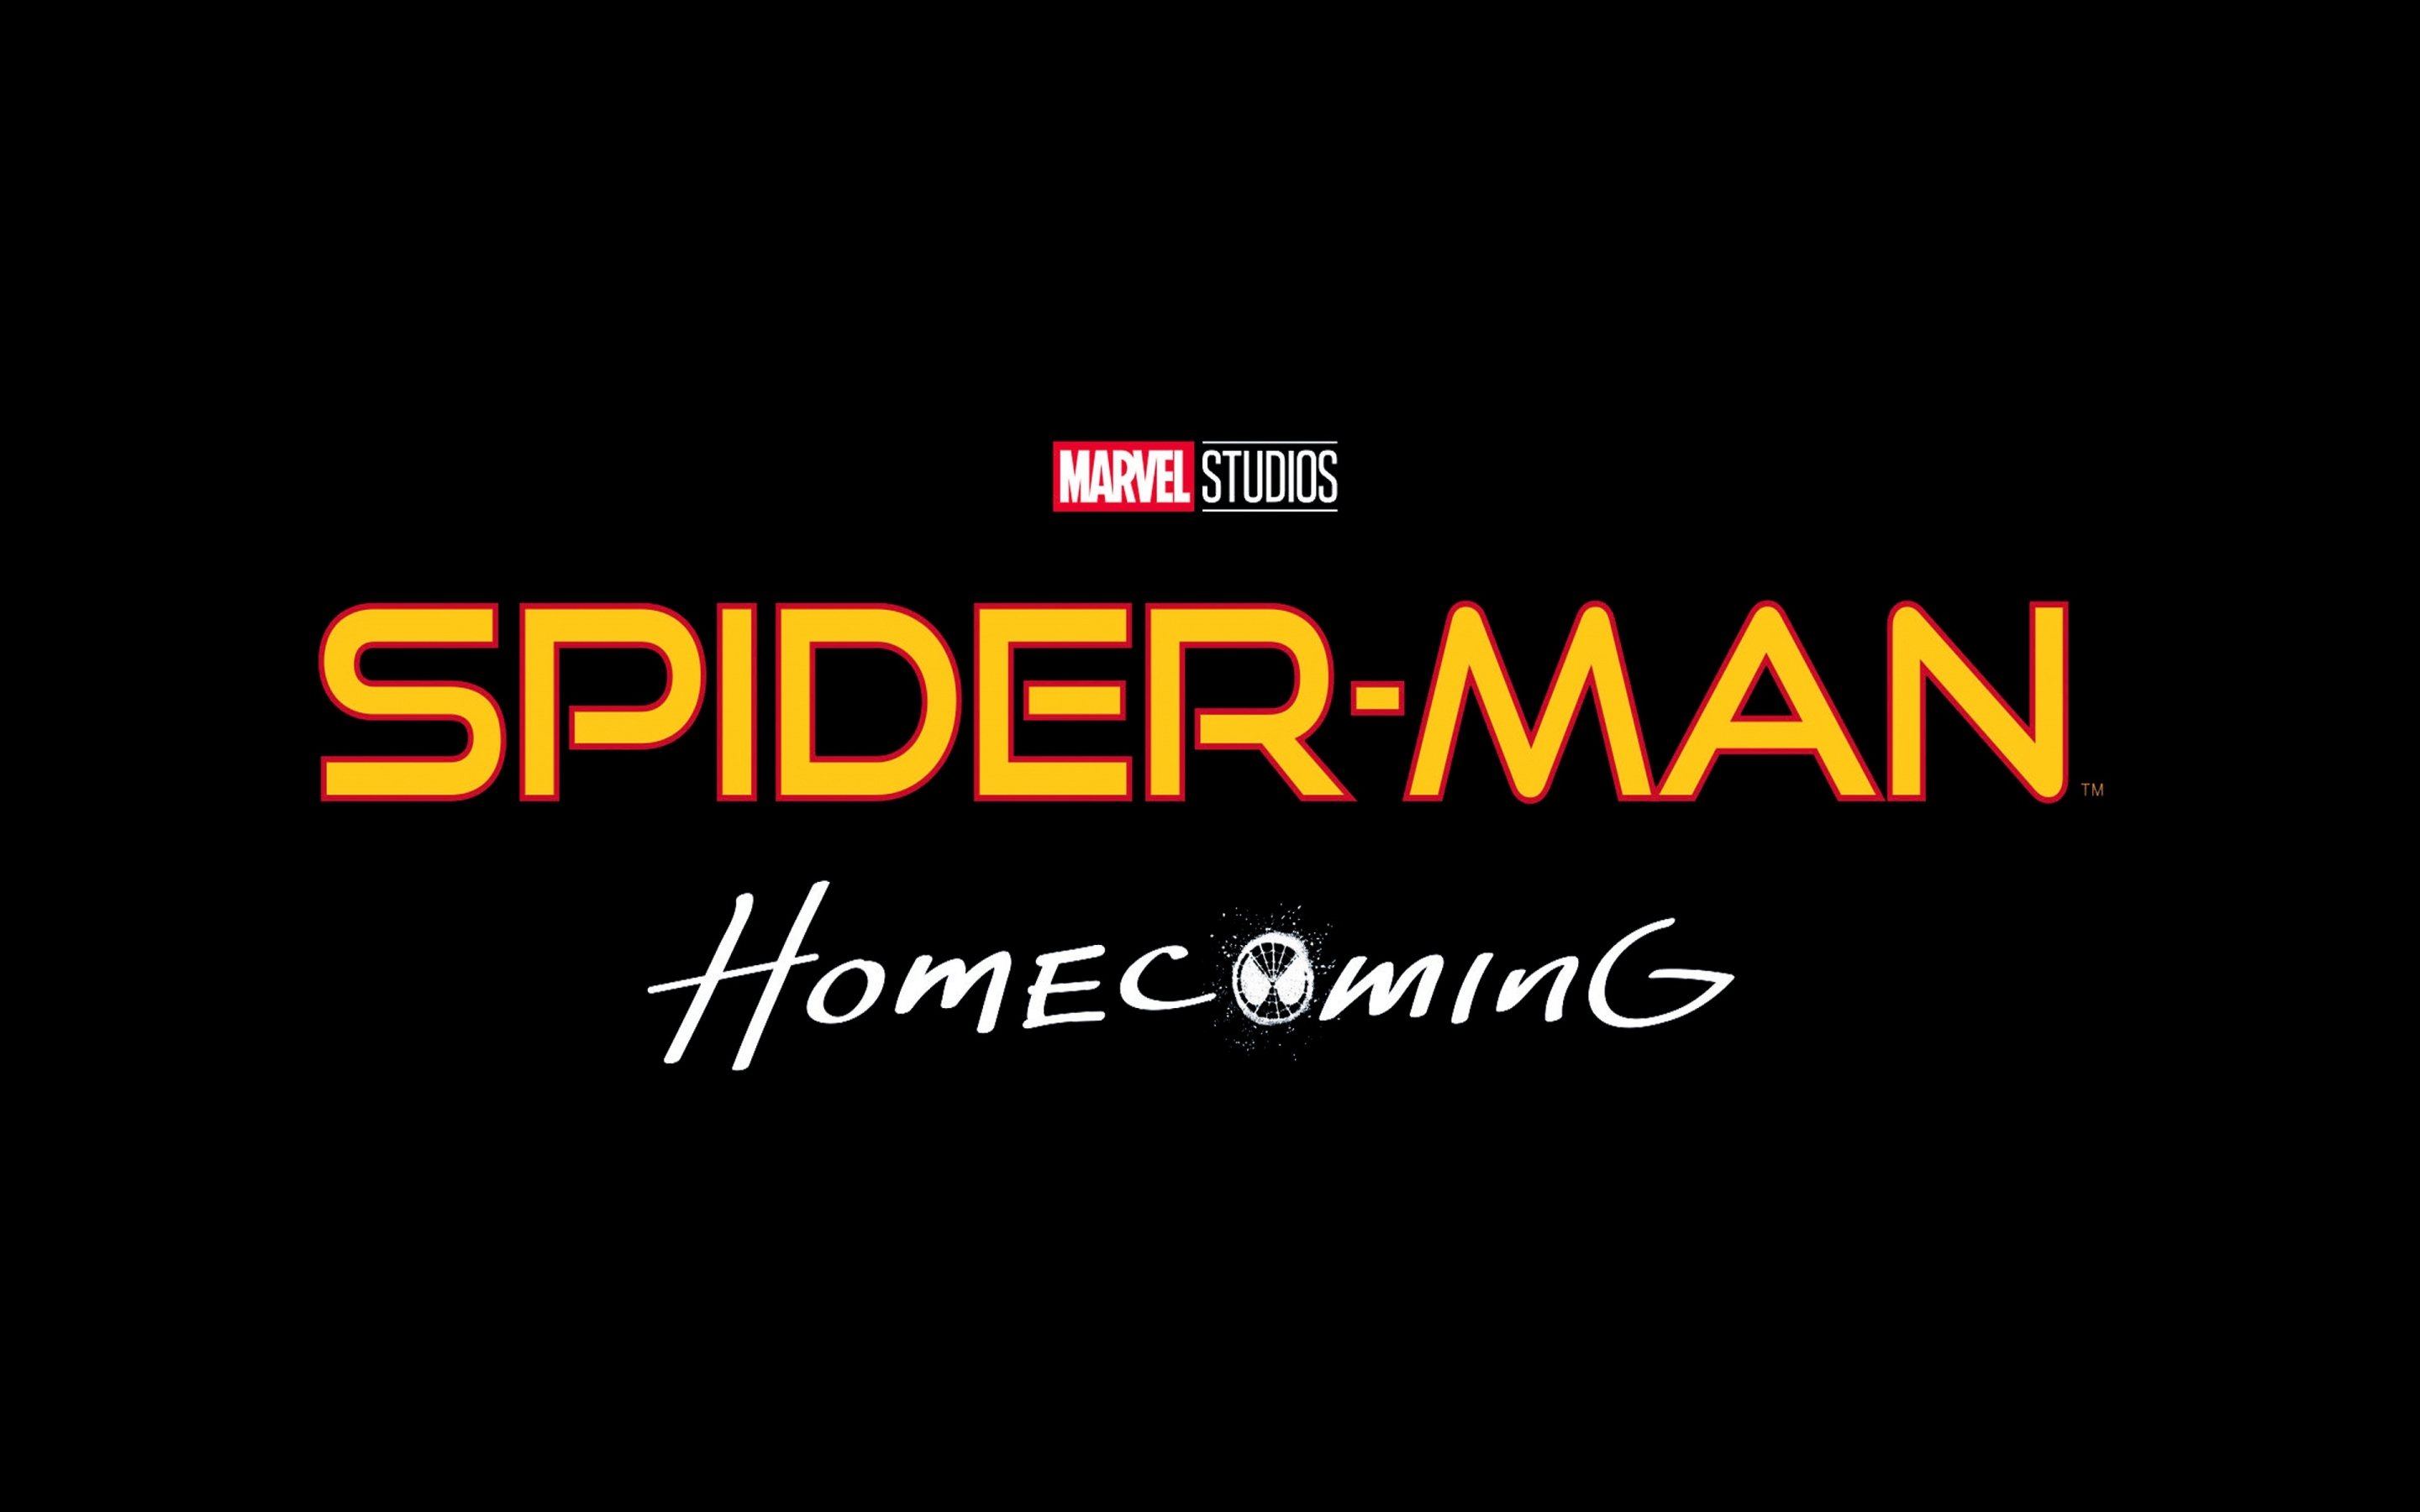 Spiderman Homecoming 2017 for 2880 x 1800 Retina Display resolution